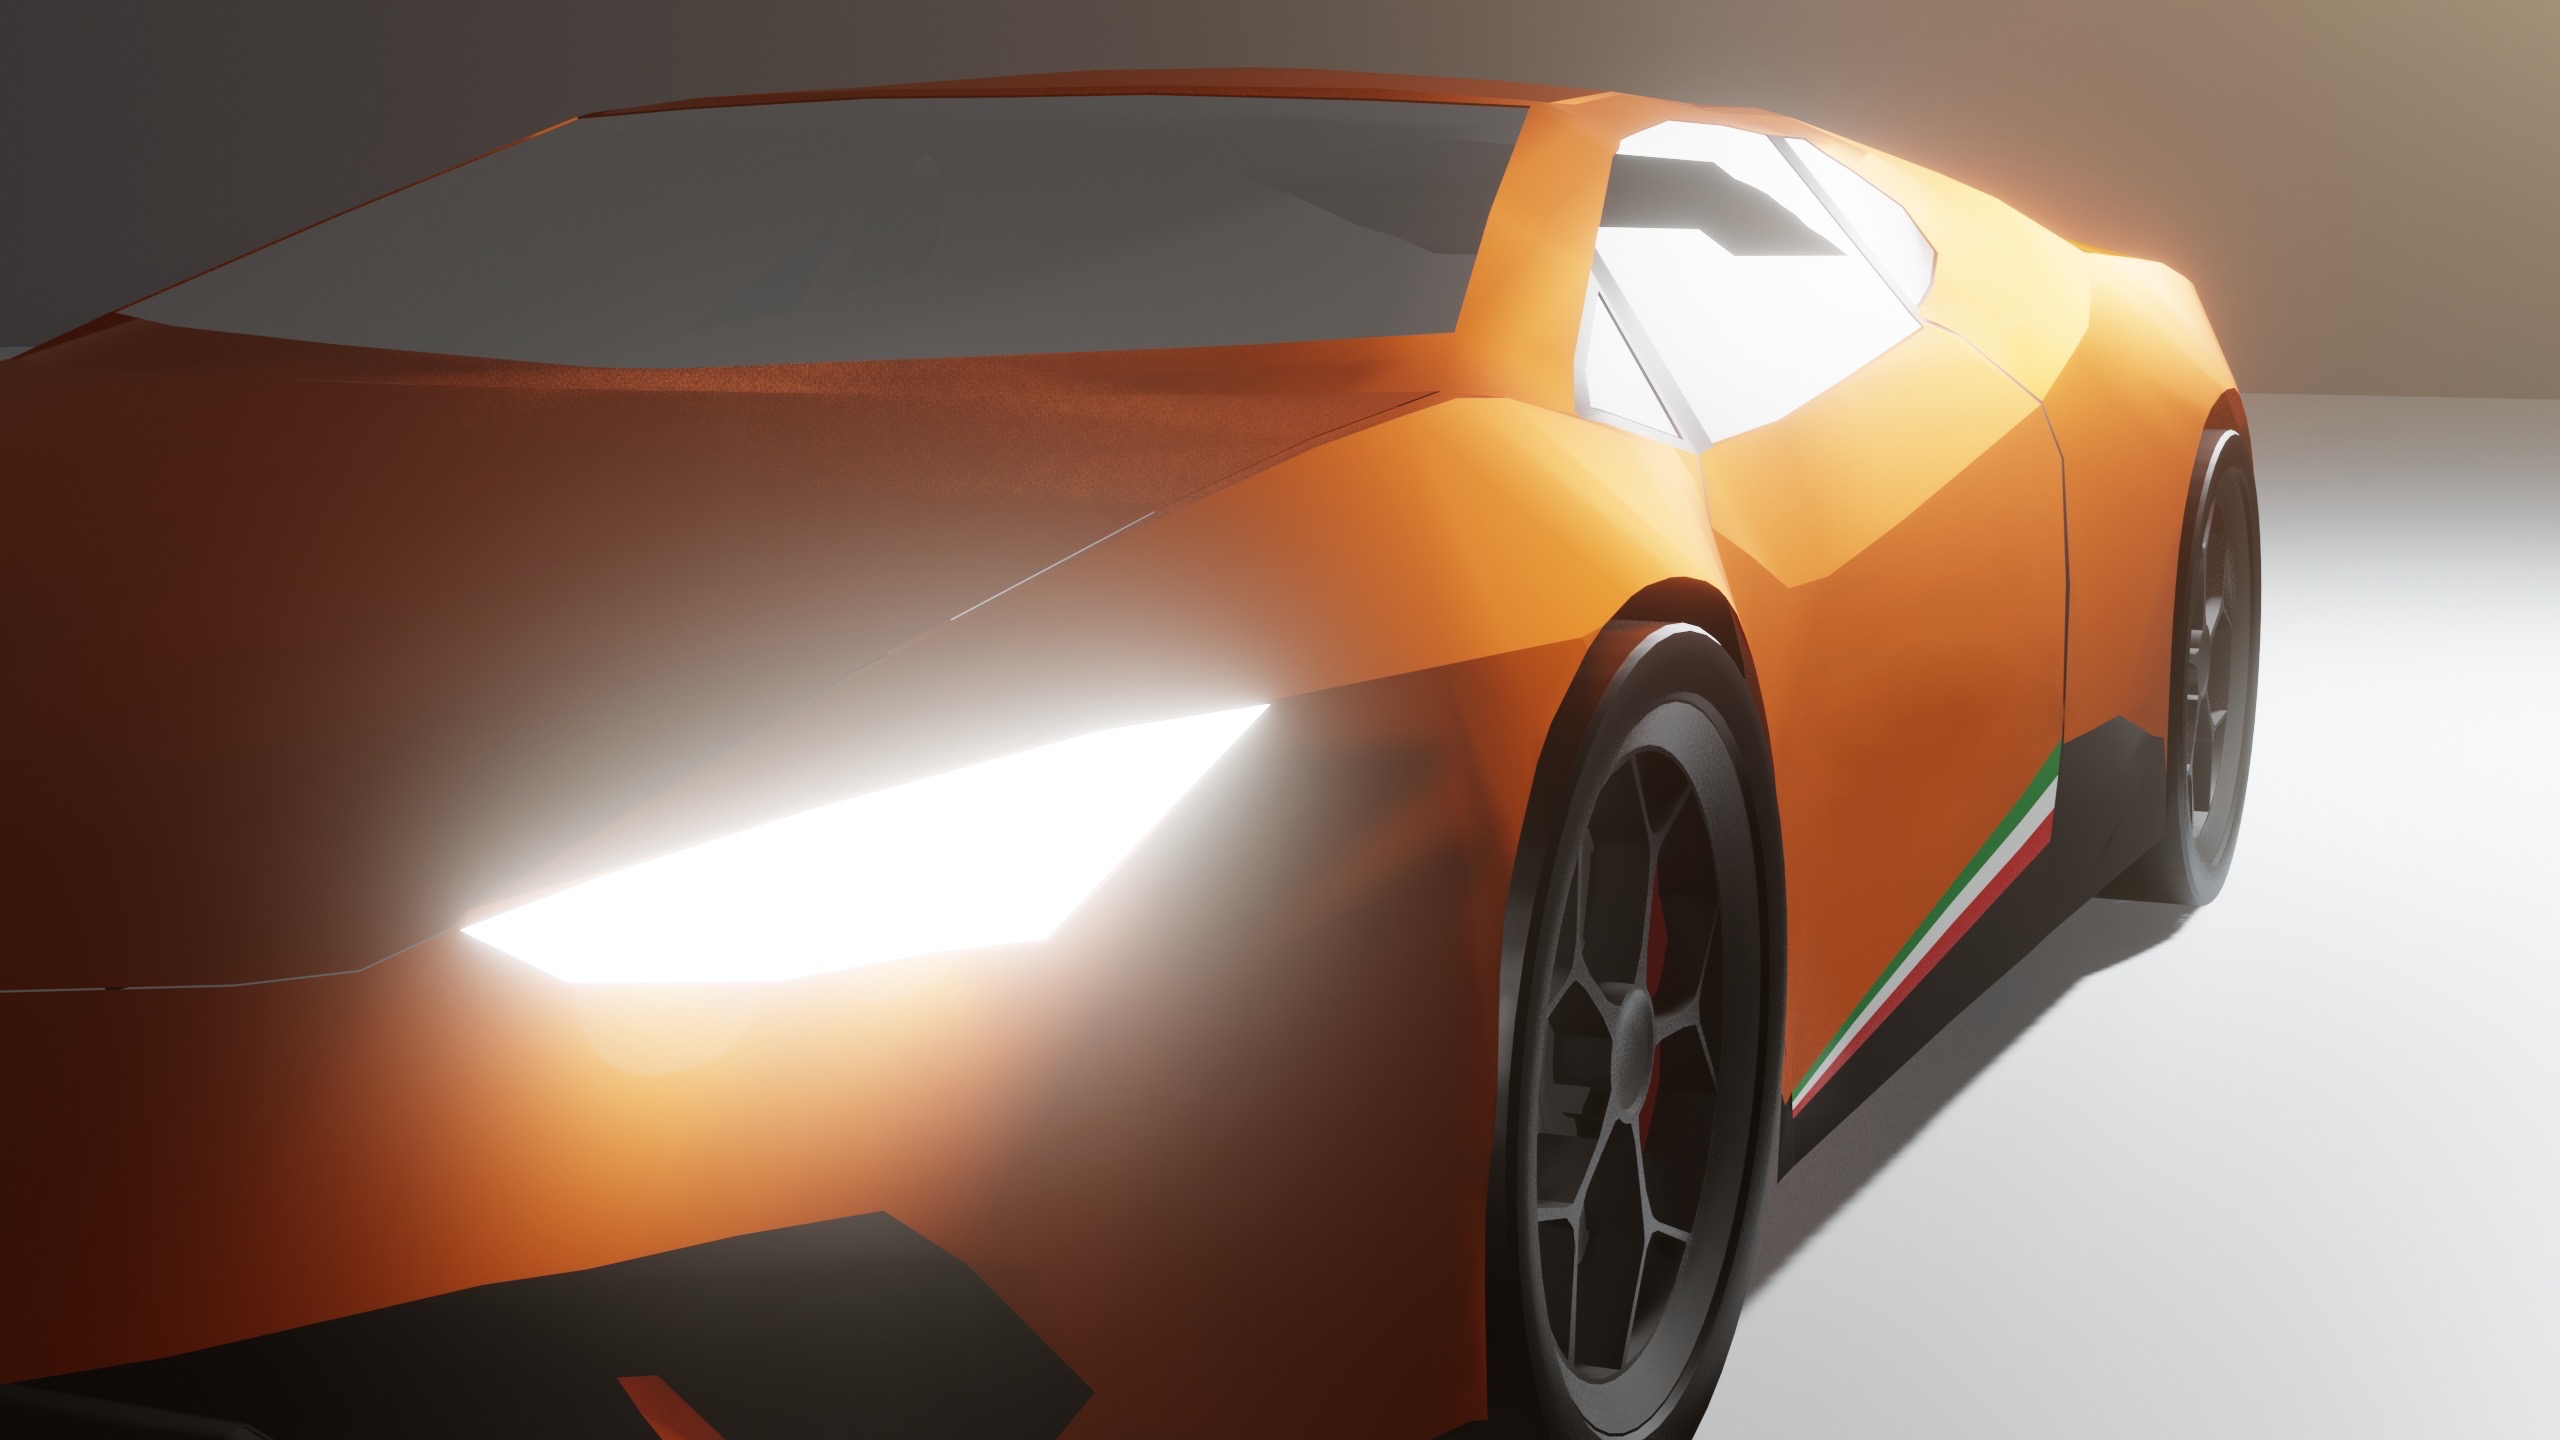 An orange sports car resembling a Lambo